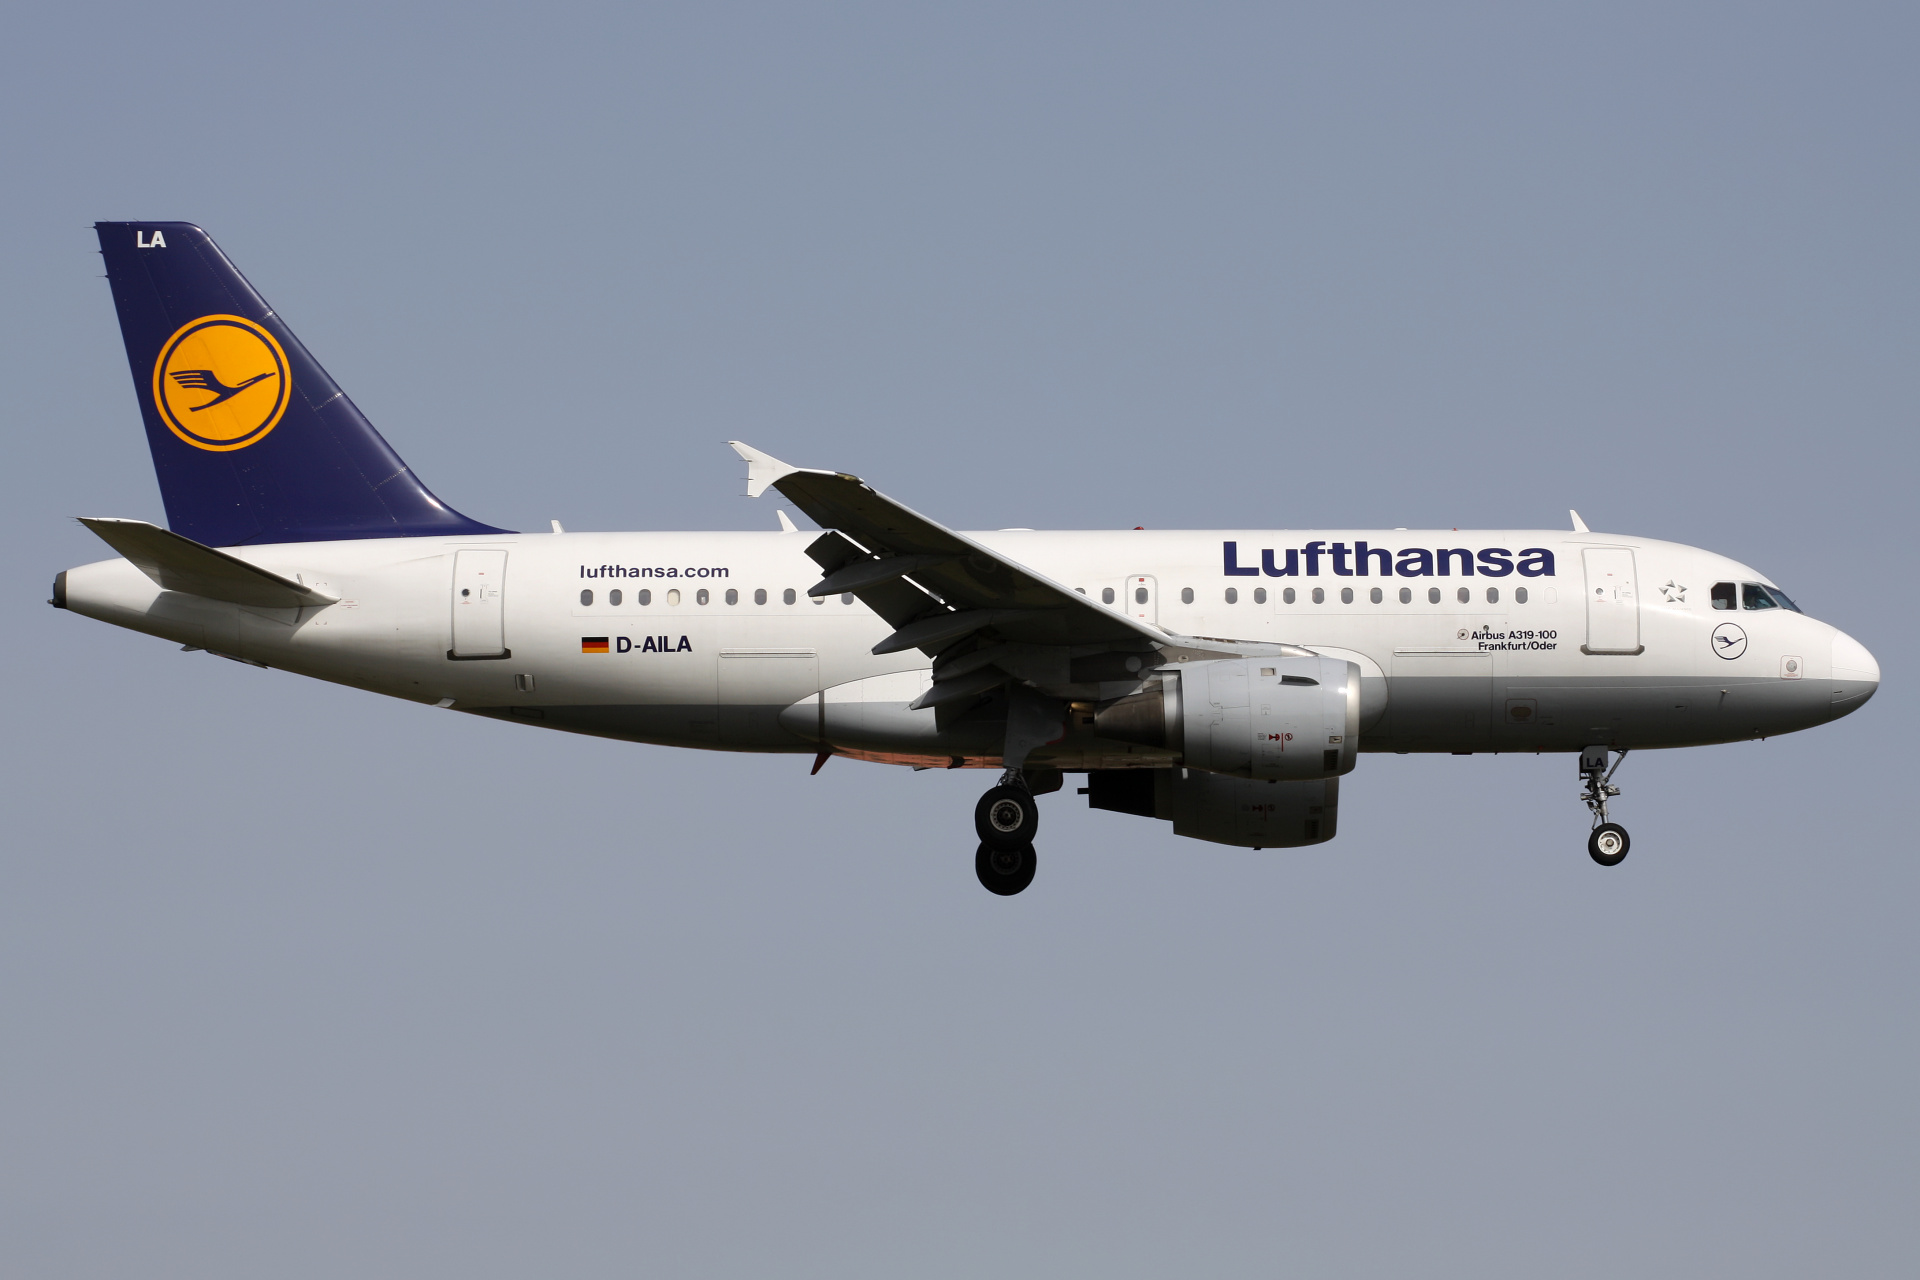 D-AILA (Aircraft » EPWA Spotting » Airbus A319-100 » Lufthansa)